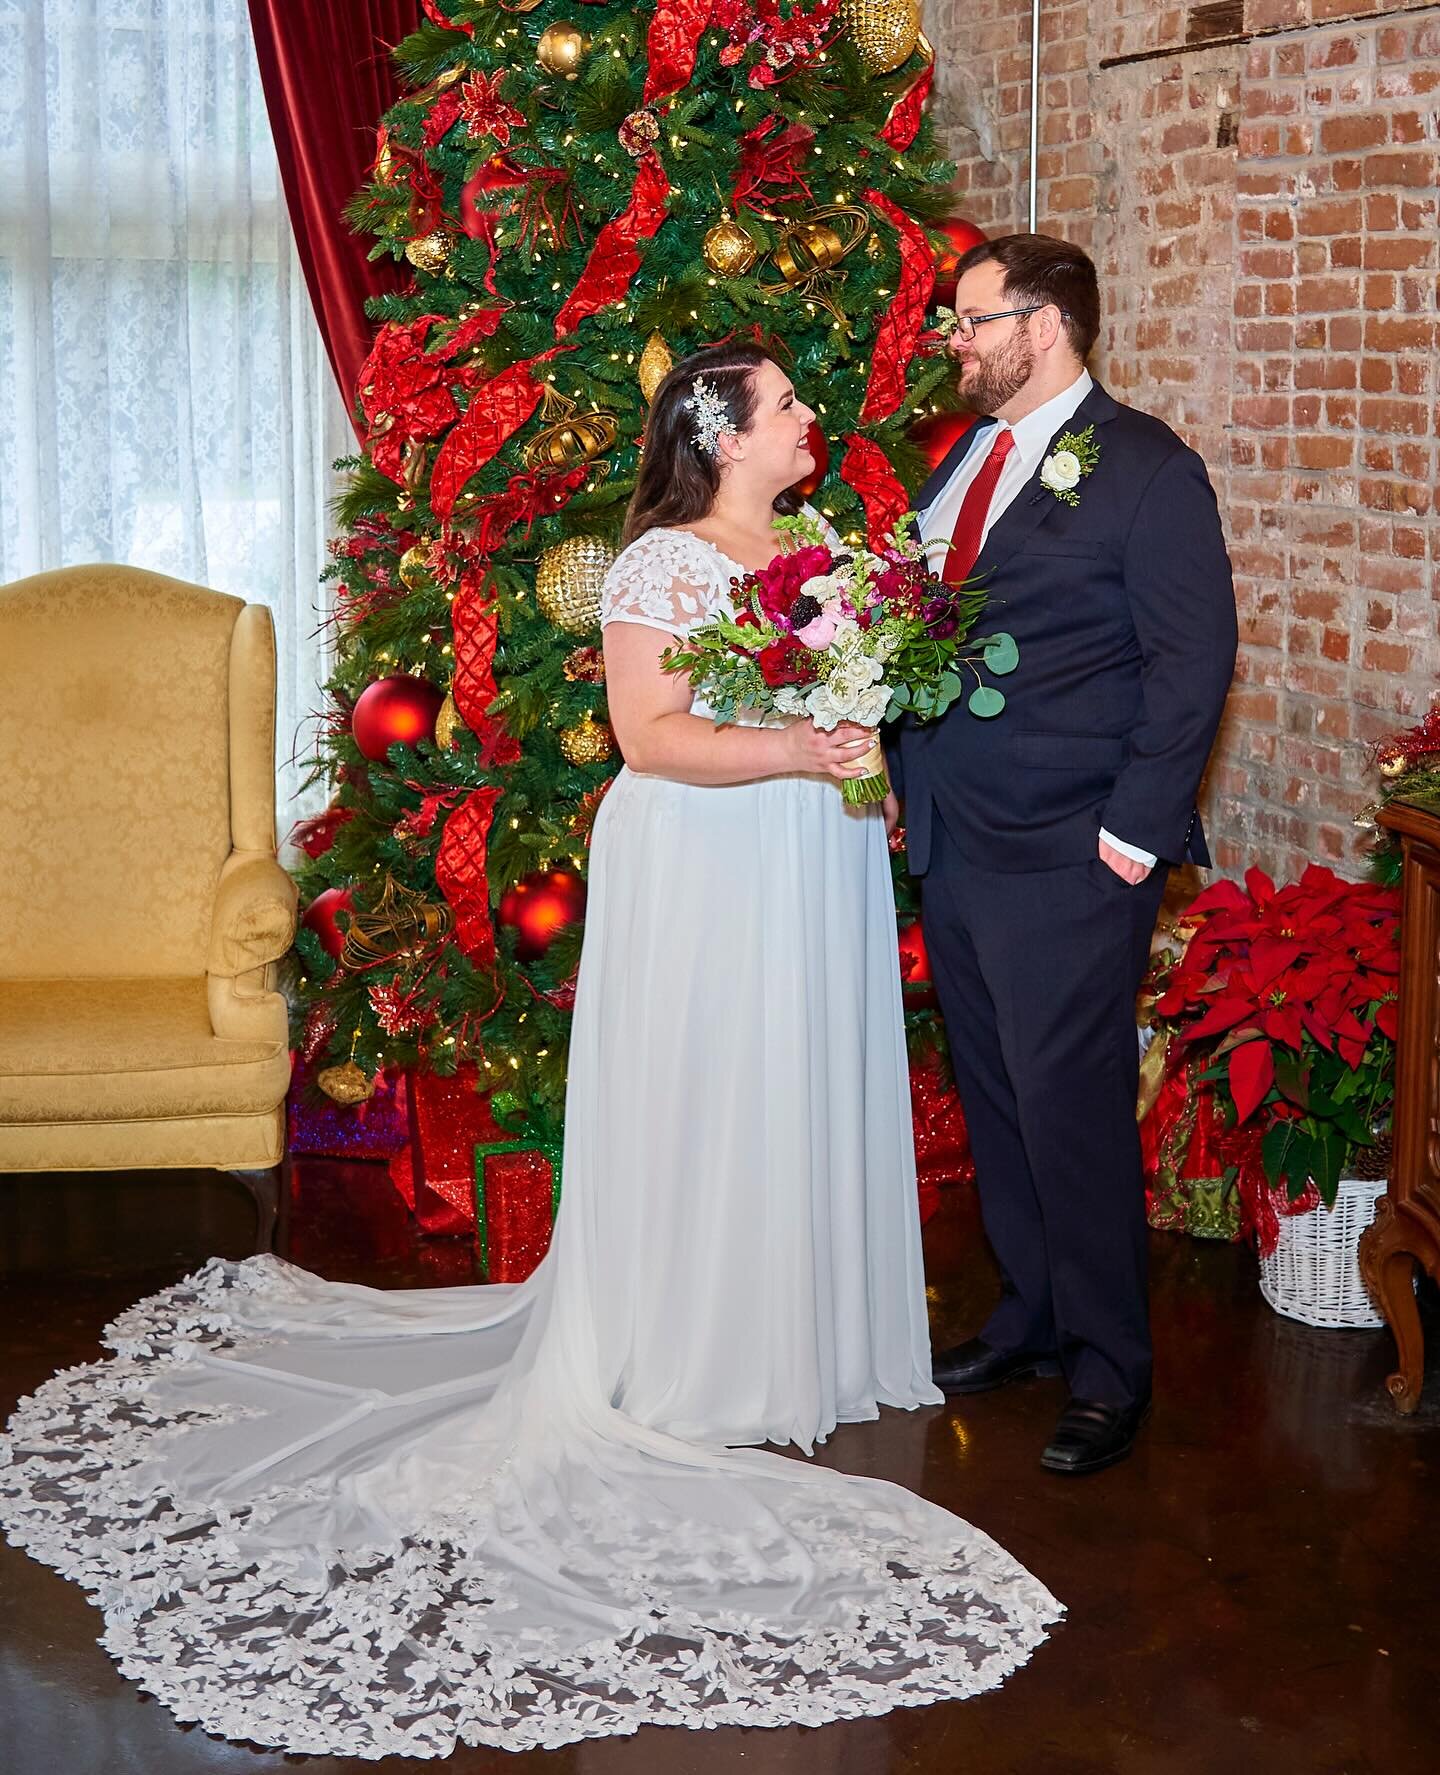 Meet Jessica, our radiant #RealOBHBride, whose Christmas fairy tale wedding lit up the season with pure magic. 💫💜 #WinterWonderlandLove
📸: @magekphotography